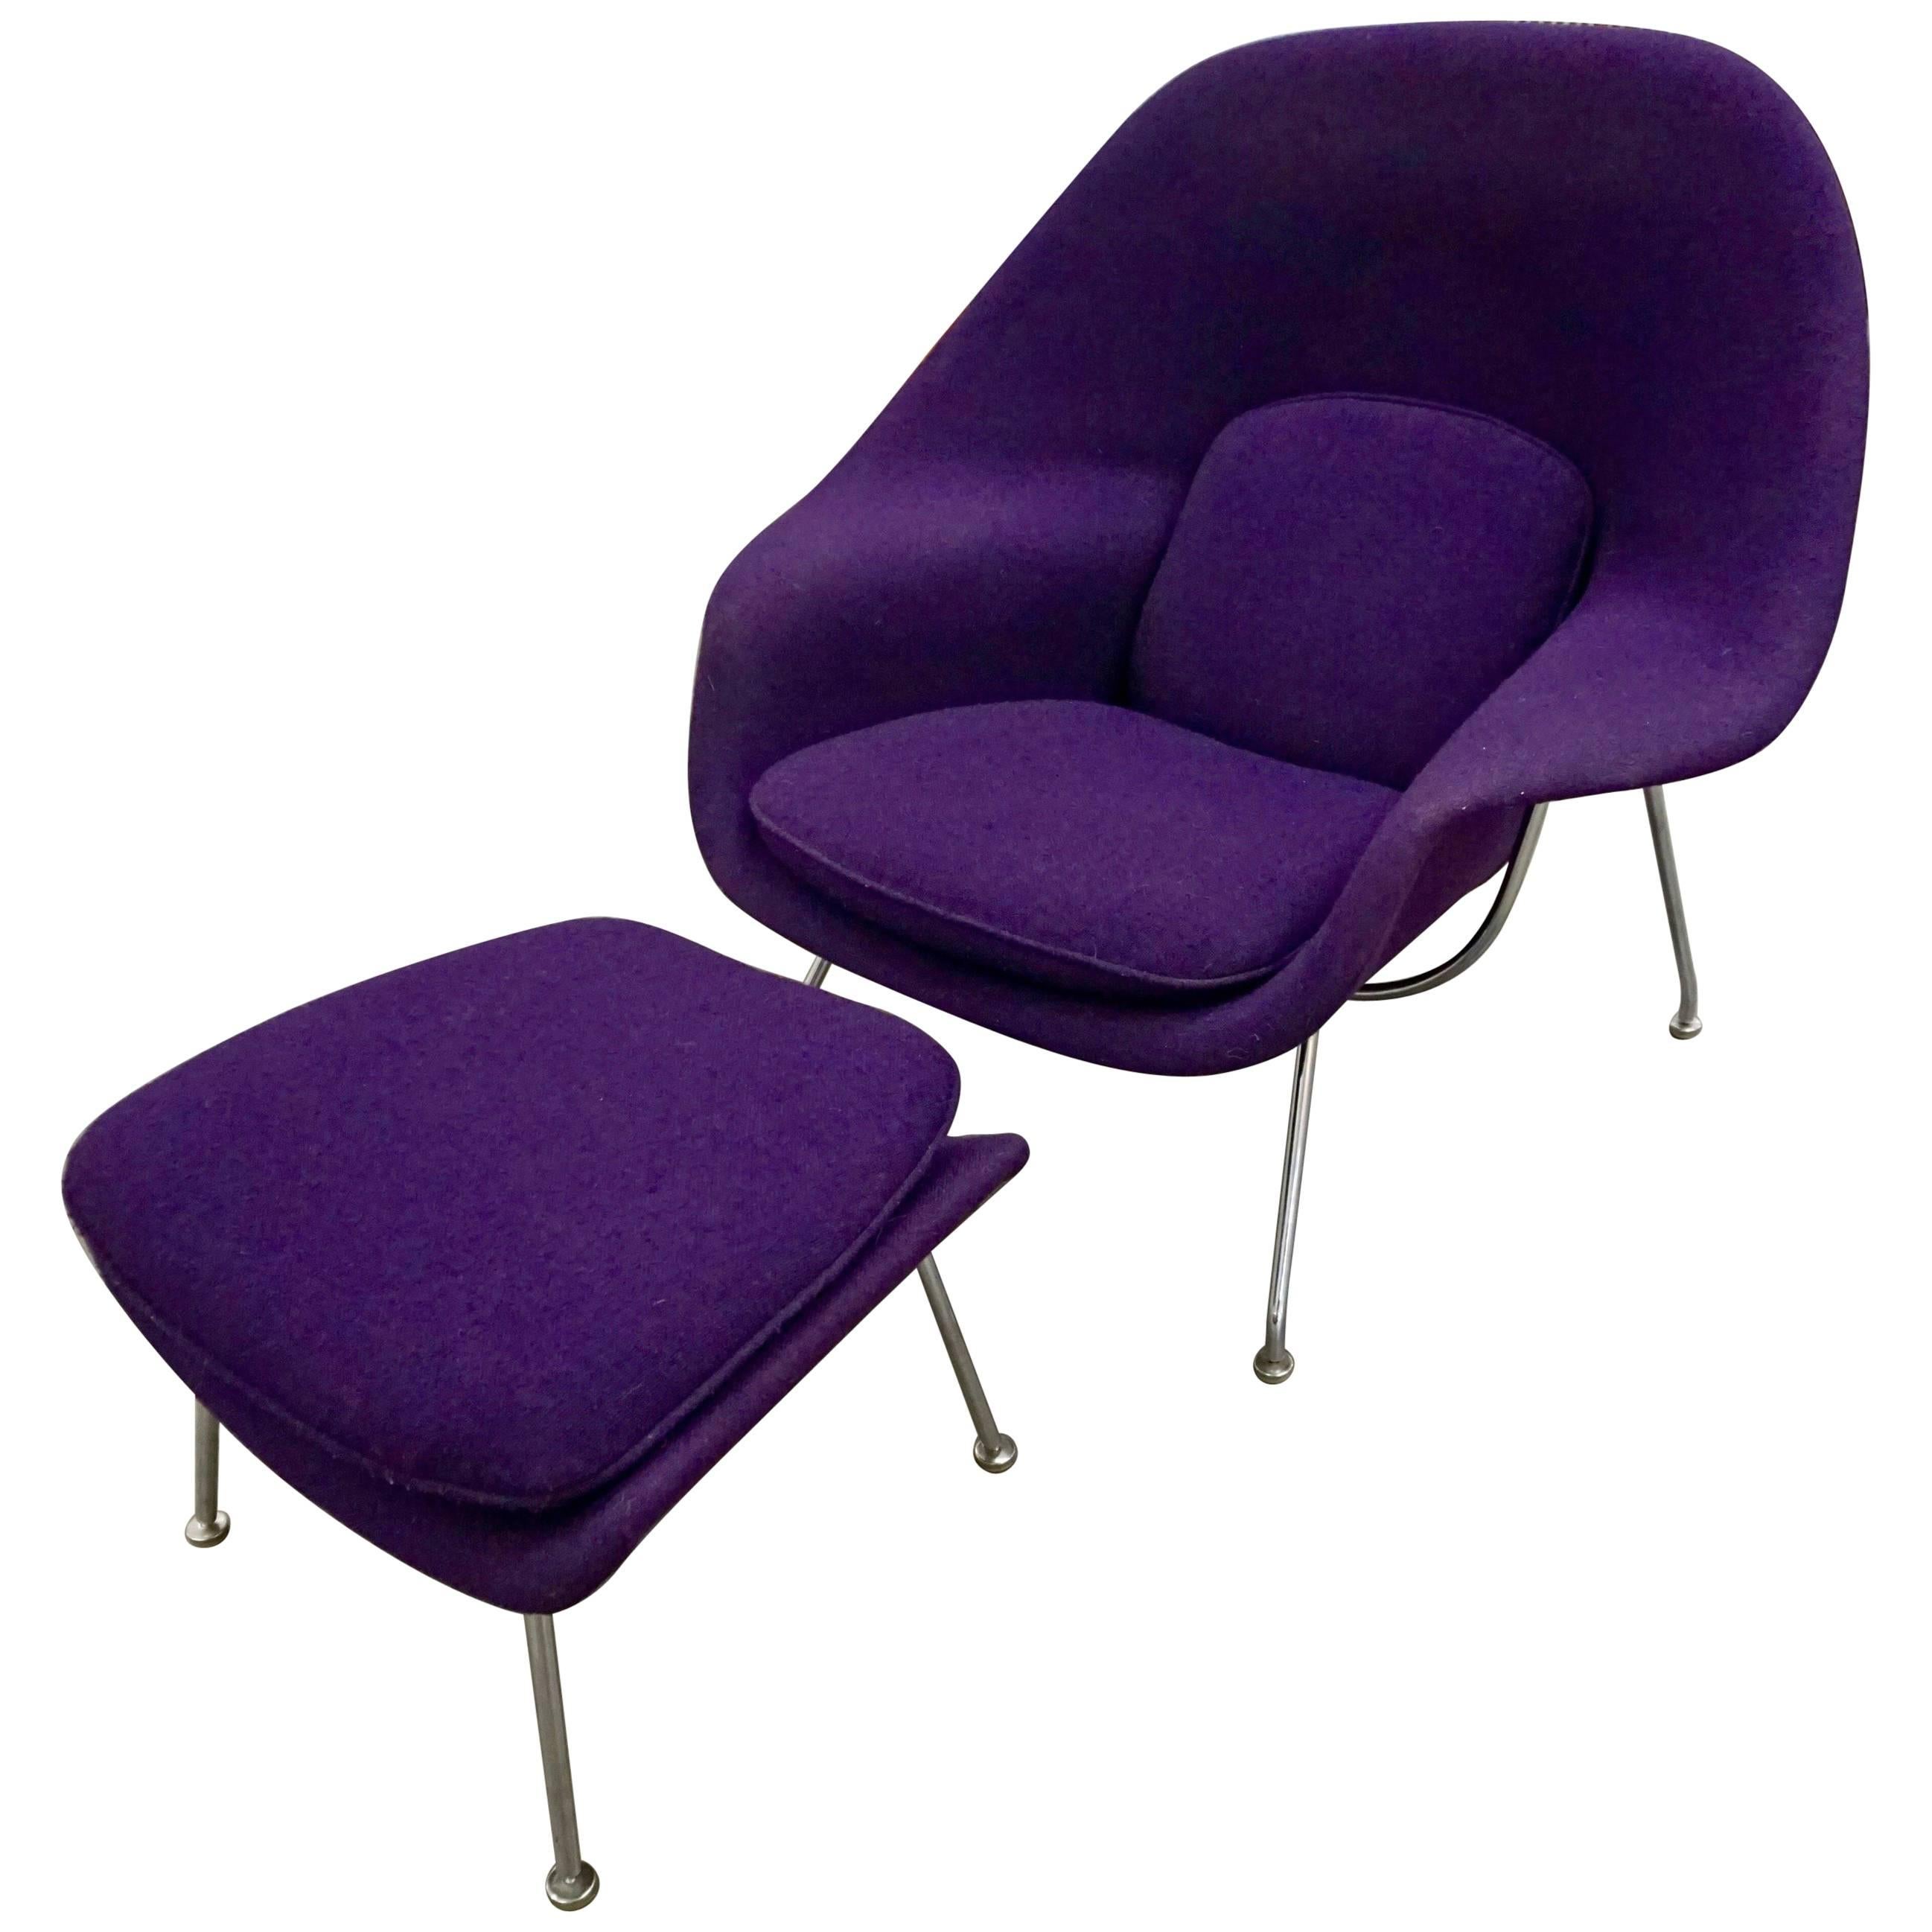 Eero Saarinen "Womb" Lounge Chair and Ottoman